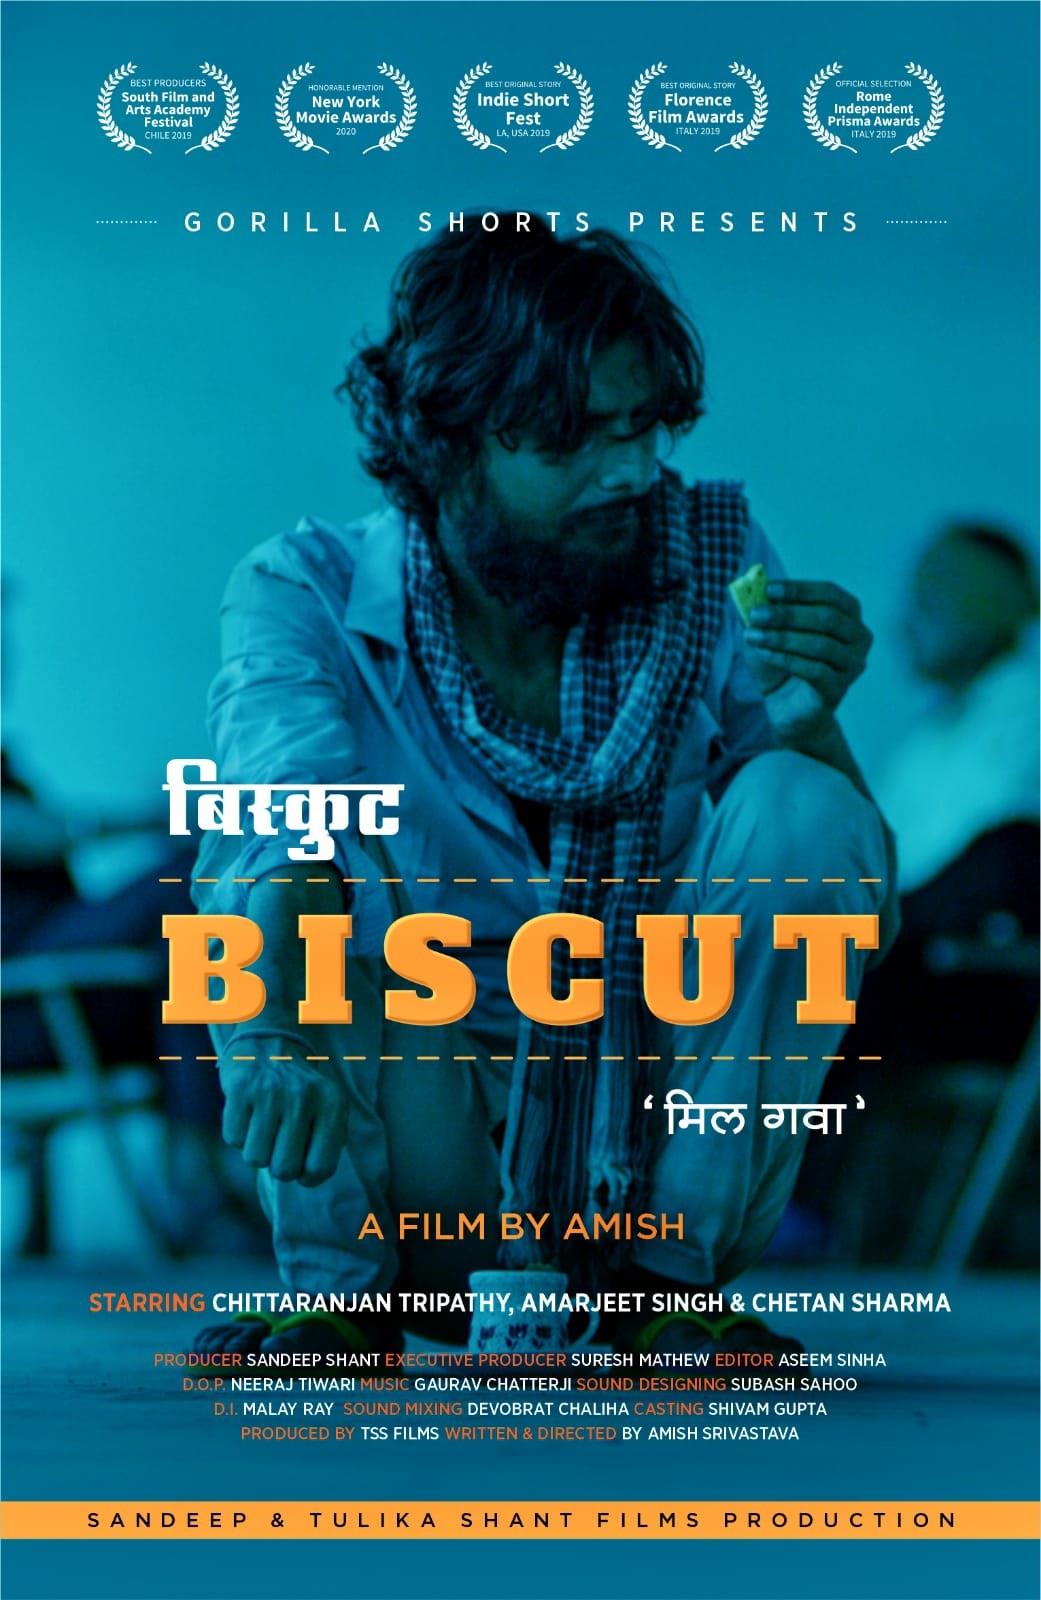 Amish Srivastava tackles election scenario, democratic set-up in his short film 'Biscut'